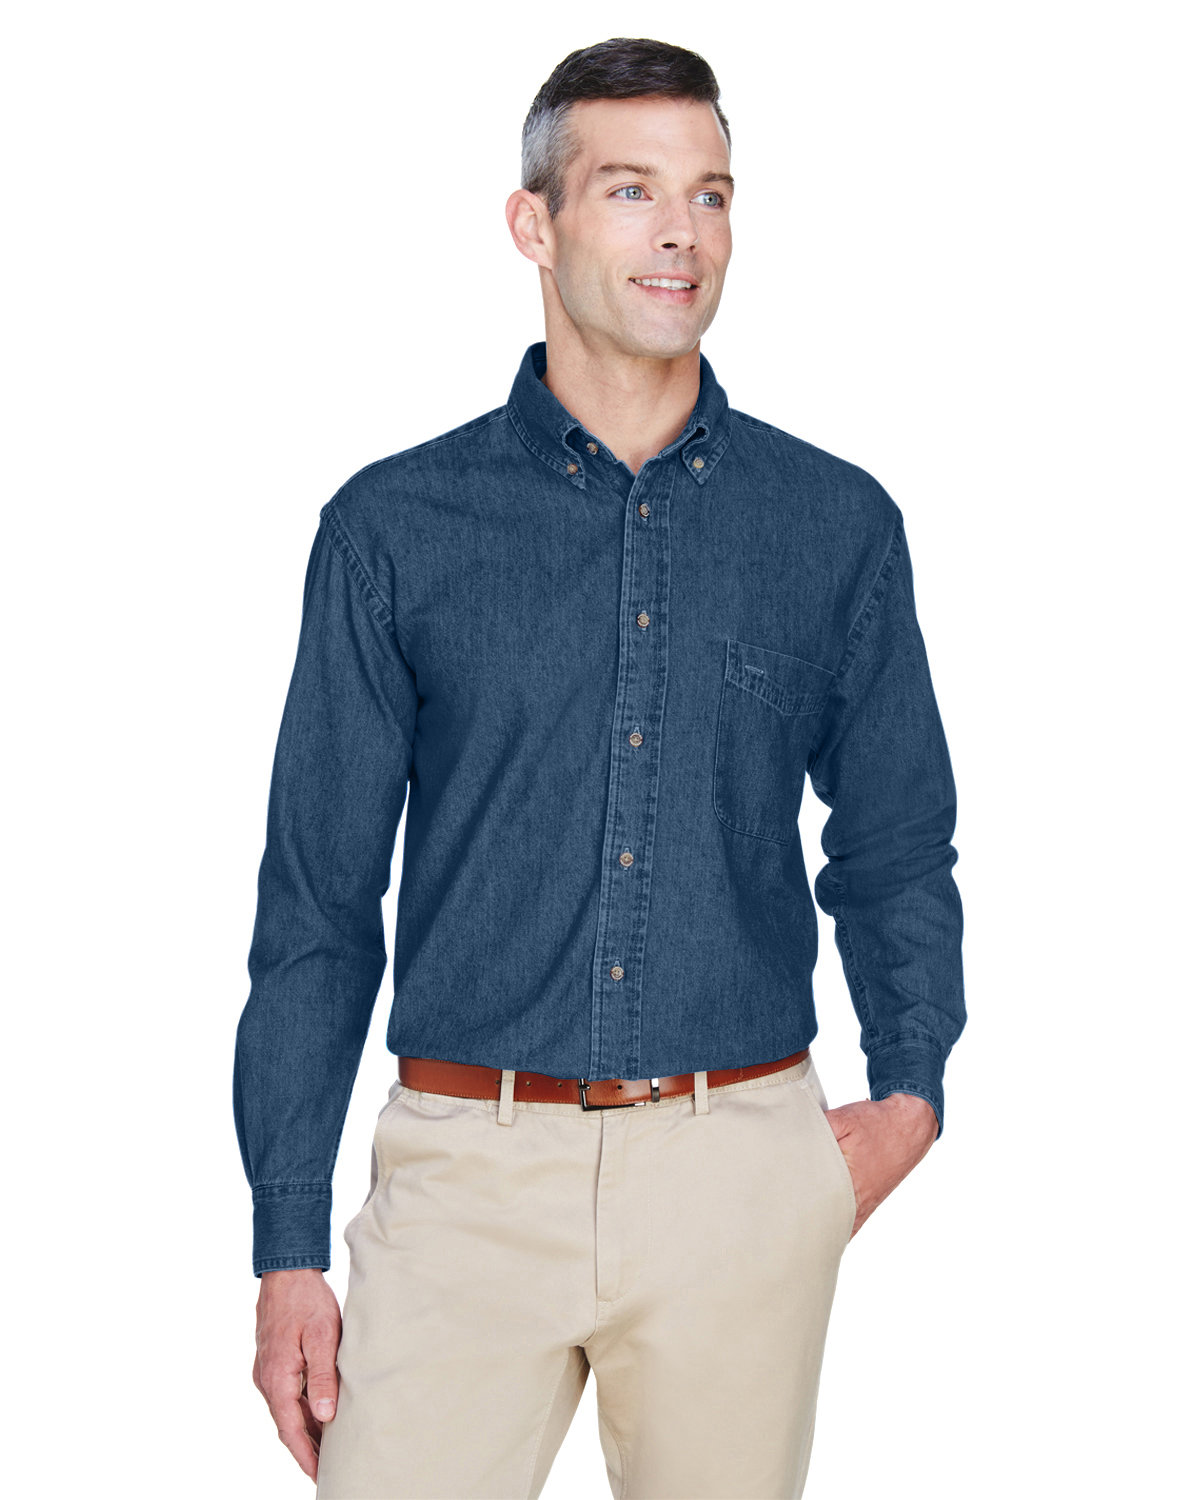 Men's 6.5 oz. Long-Sleeve Denim Shirt - M550